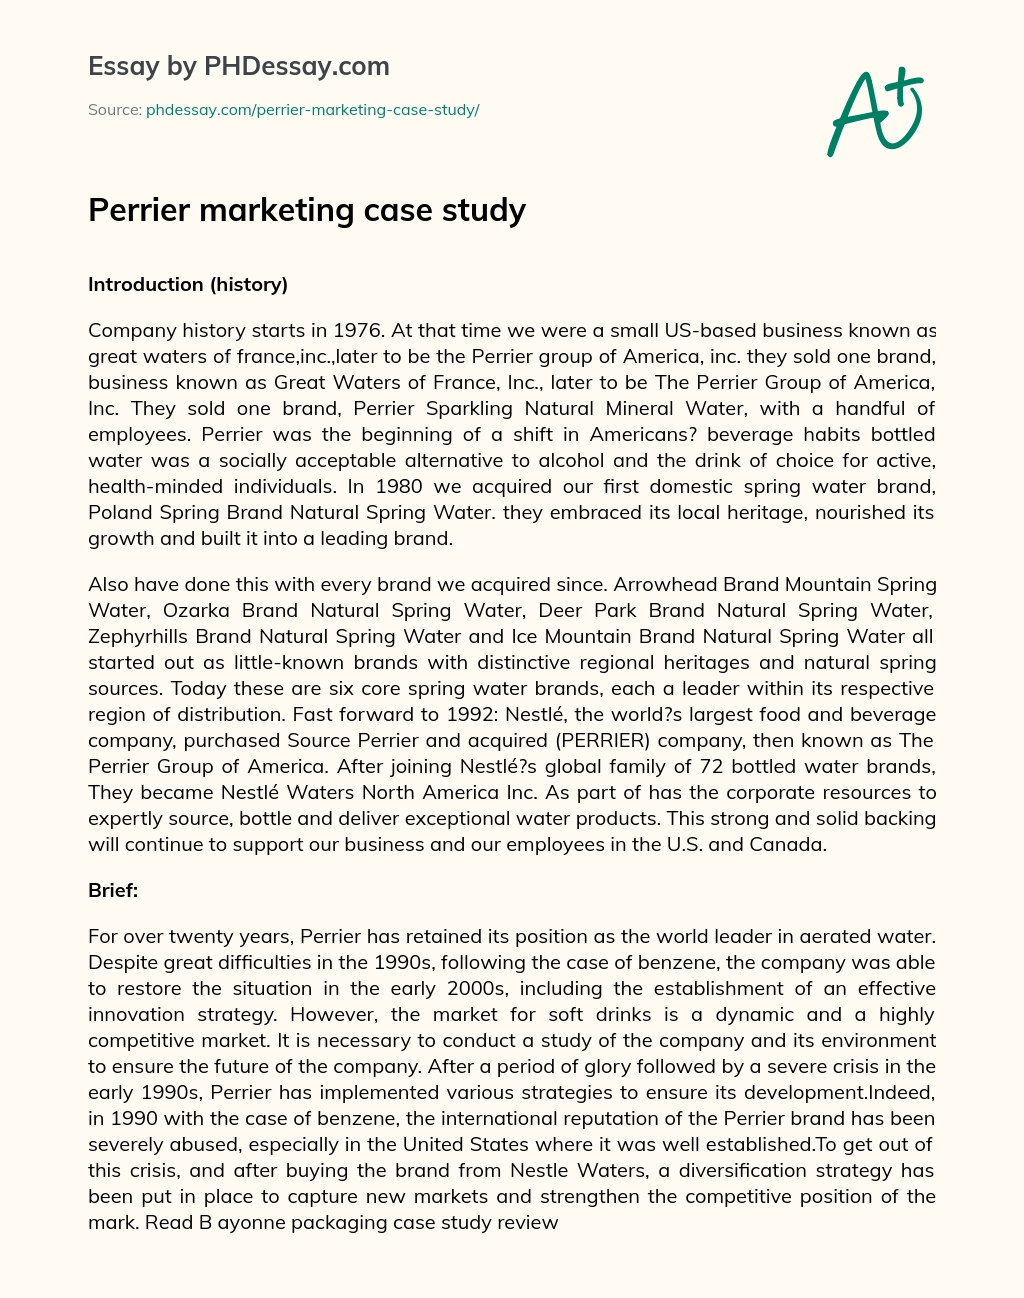 Perrier marketing case study essay